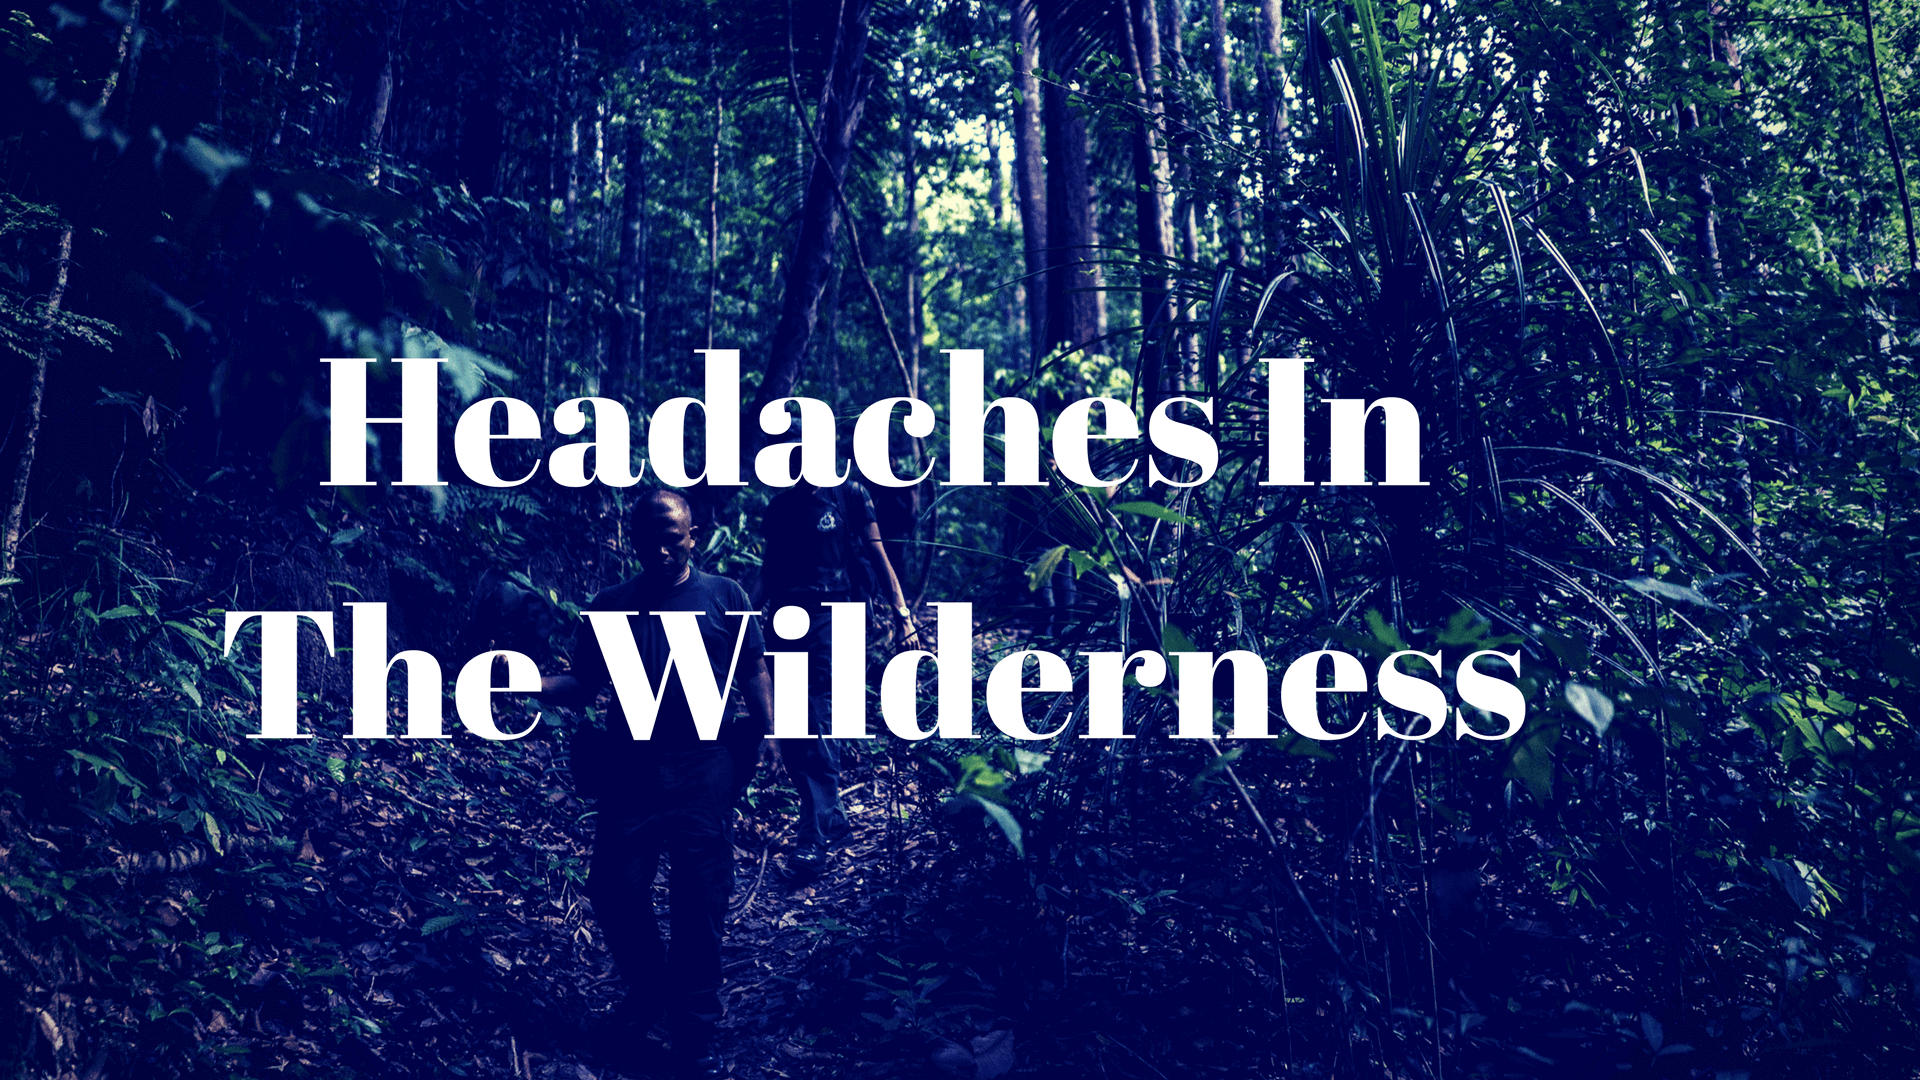 Headaches In The Wilderness